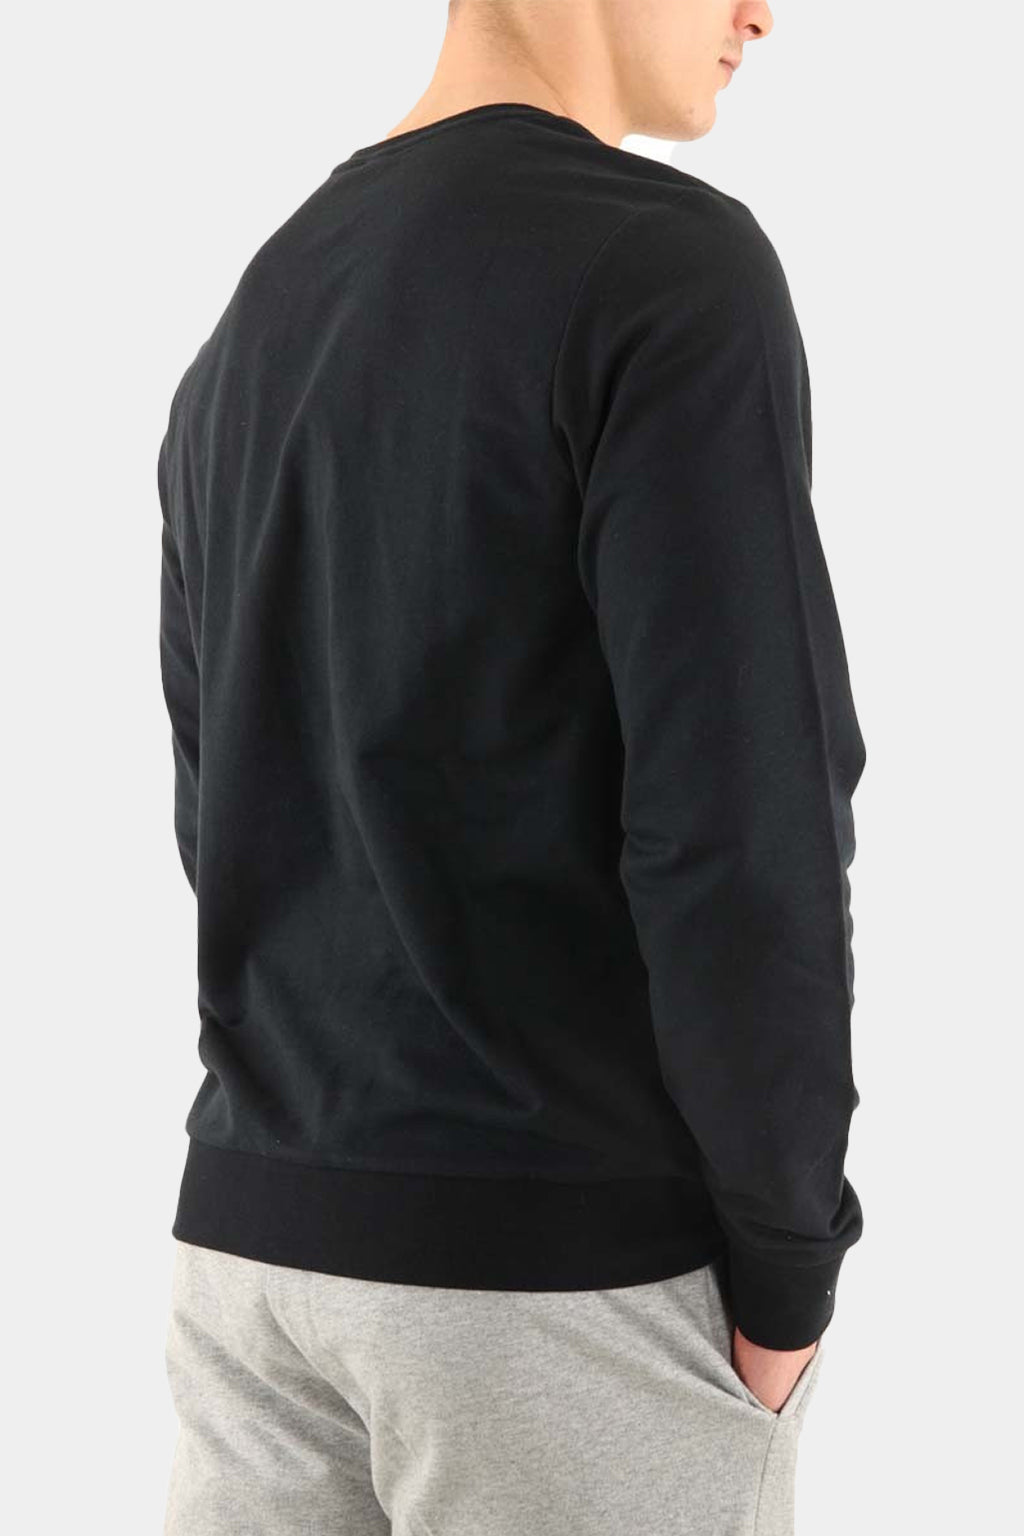 Sergio Tacchini - Men's Brand Logo Long Sleeve Sweater